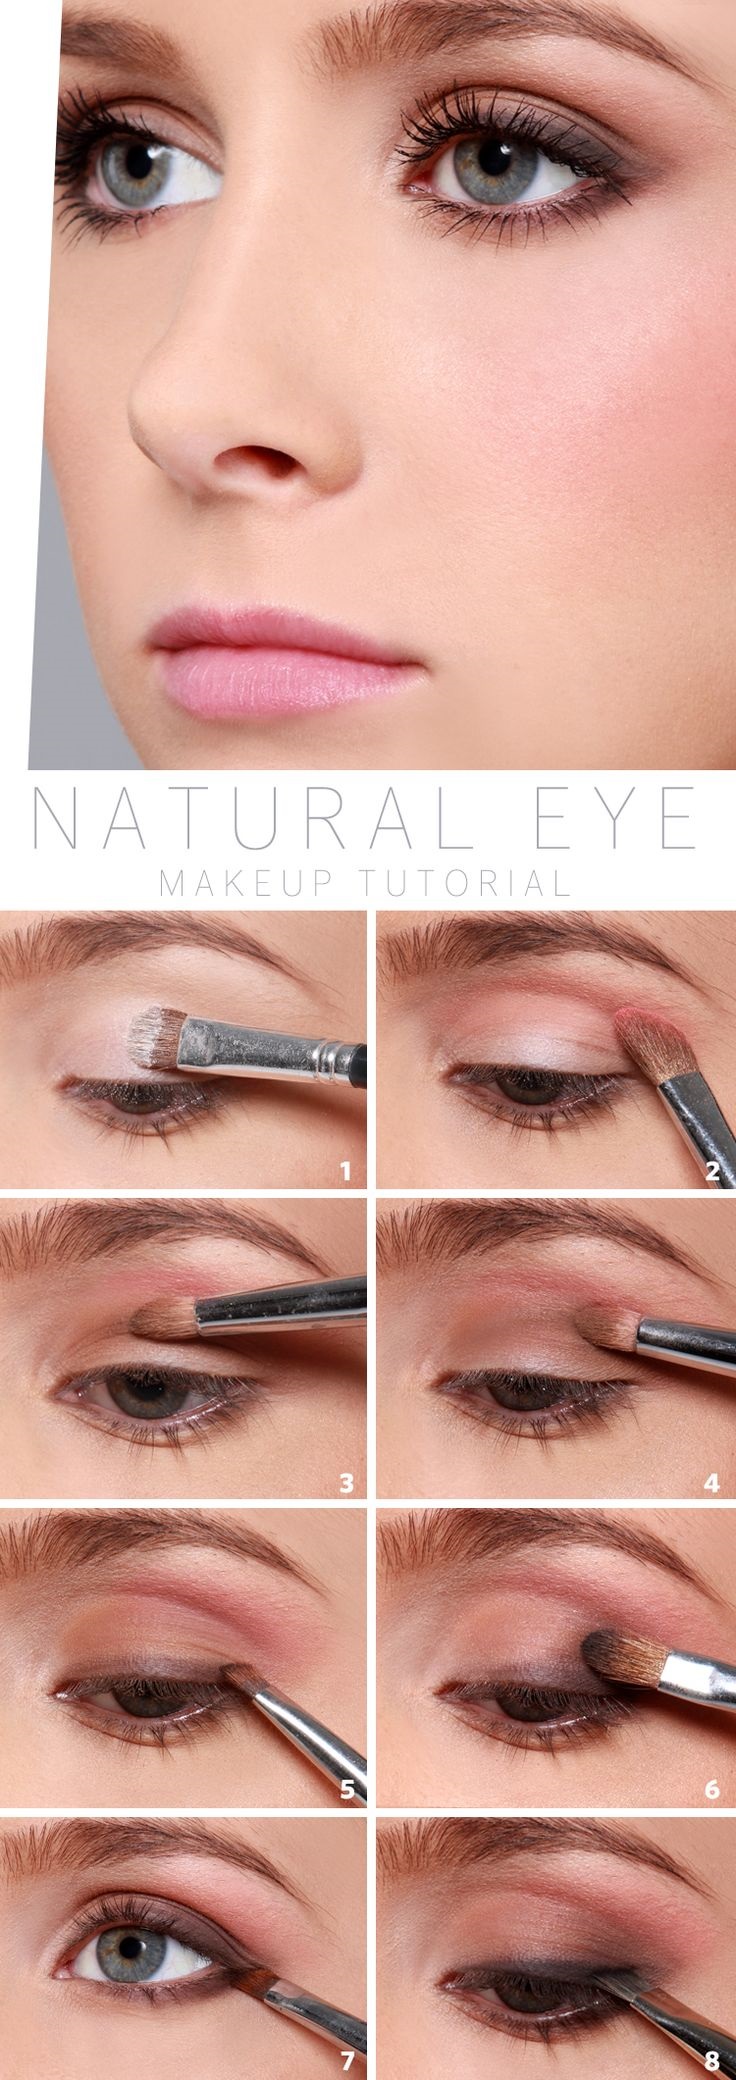 Makeup eye Eye picture tutorial  natural makeup Natural Tutorial